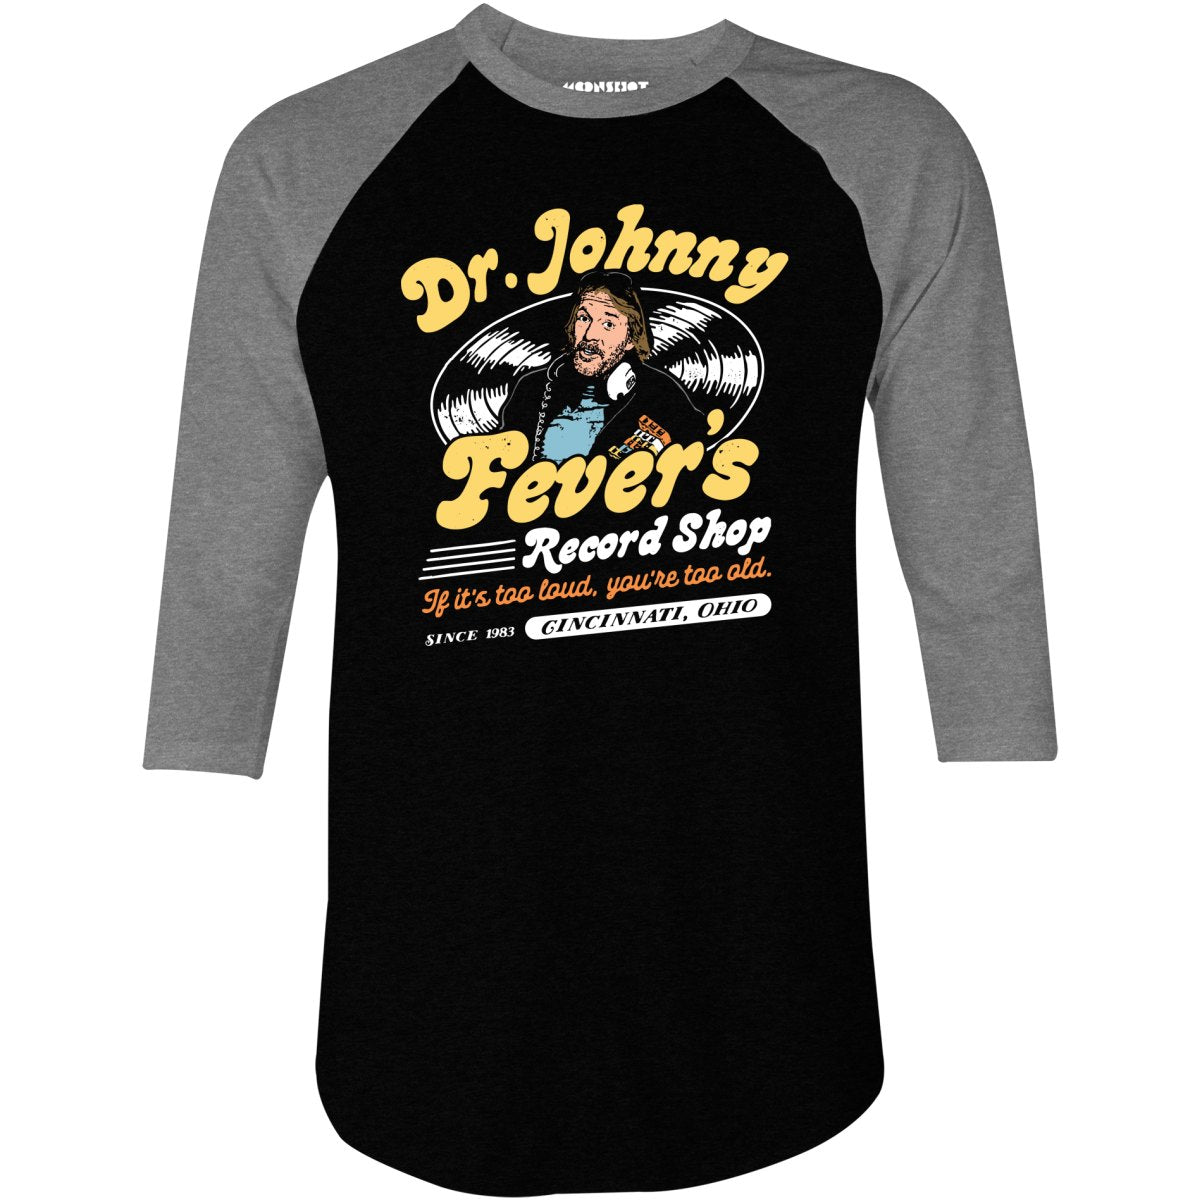 Dr. Johnny Fever's Record Shop - 3/4 Sleeve Raglan T-Shirt